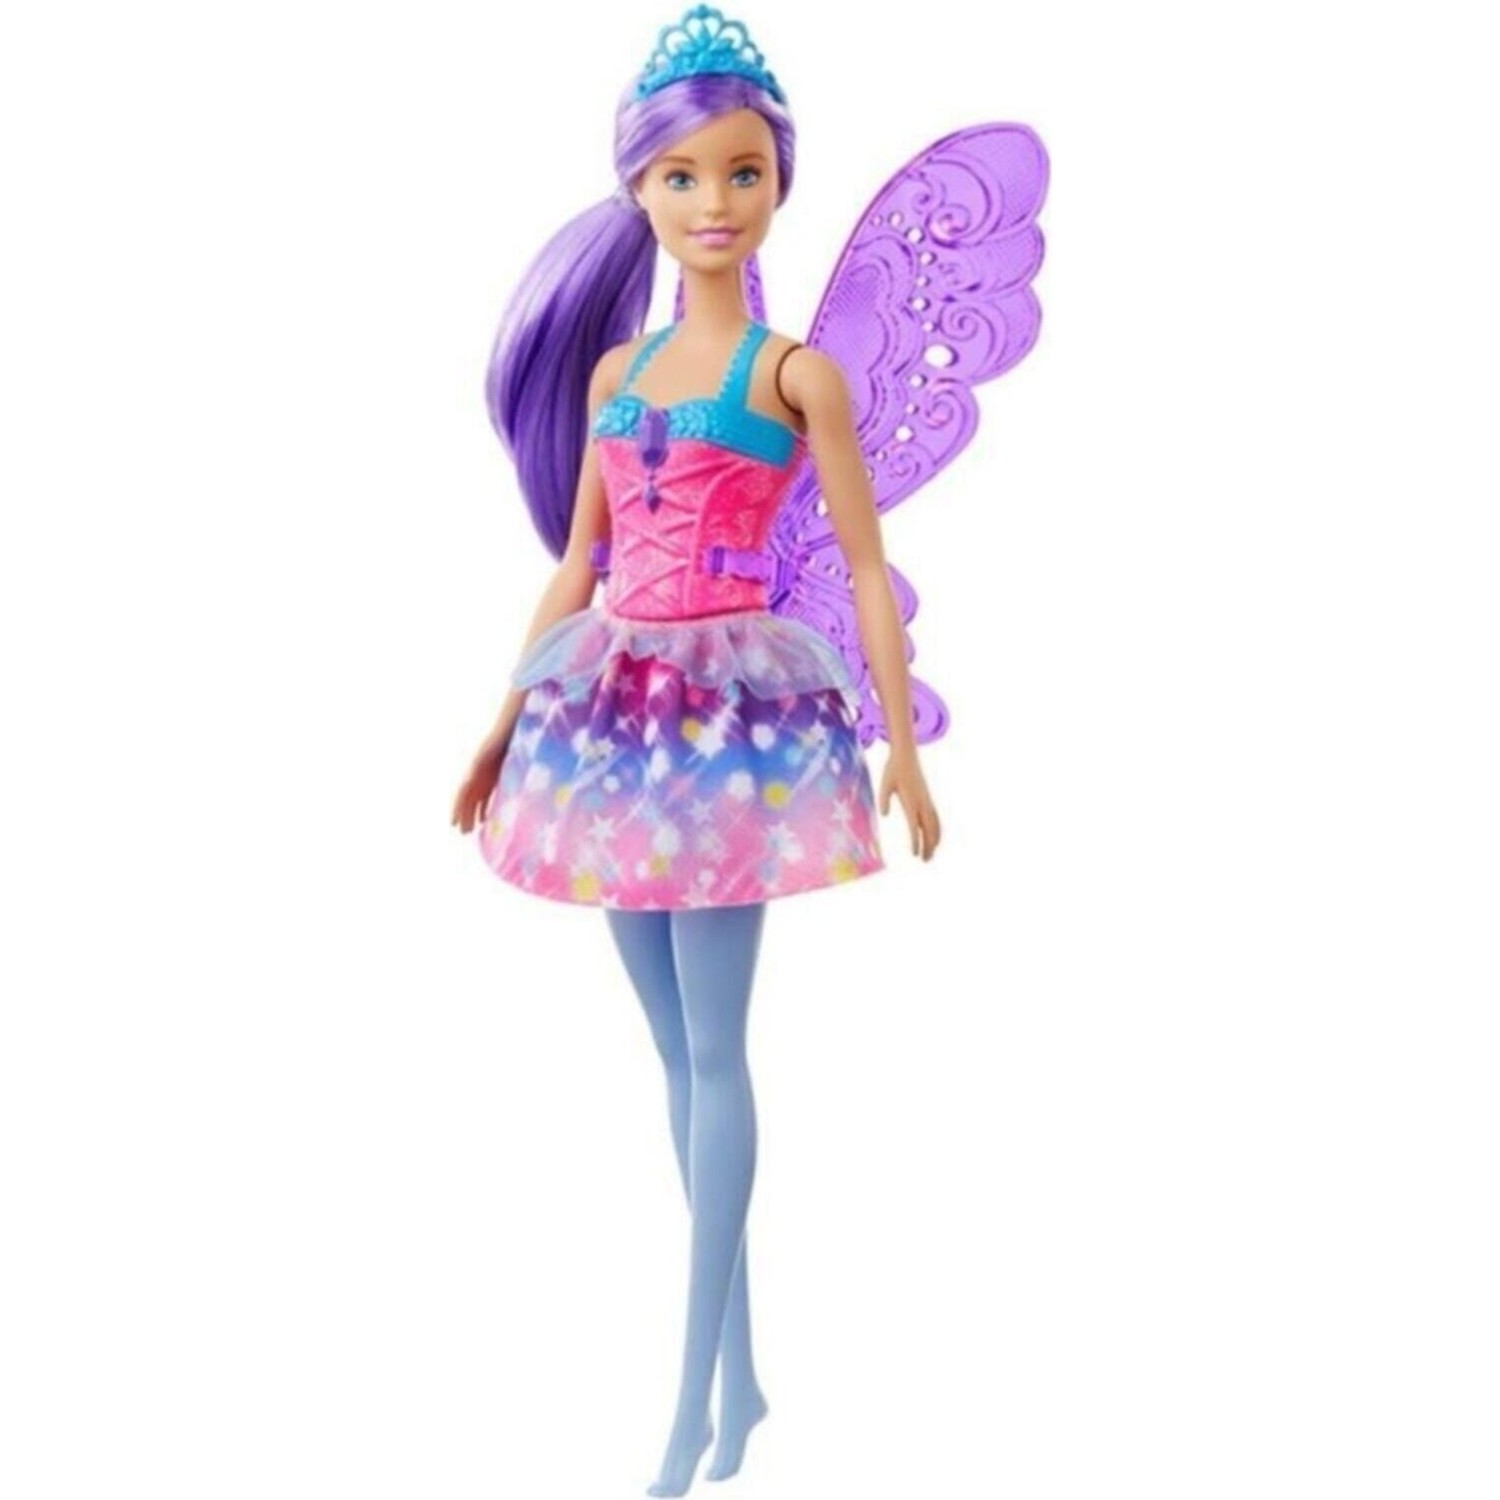 Куклы Barbie Dreamtopia Fairy Dolls красочное розовое платье, фиолетовые волосы GJK00 куклы barbie dreamtopia mermaid gjk07